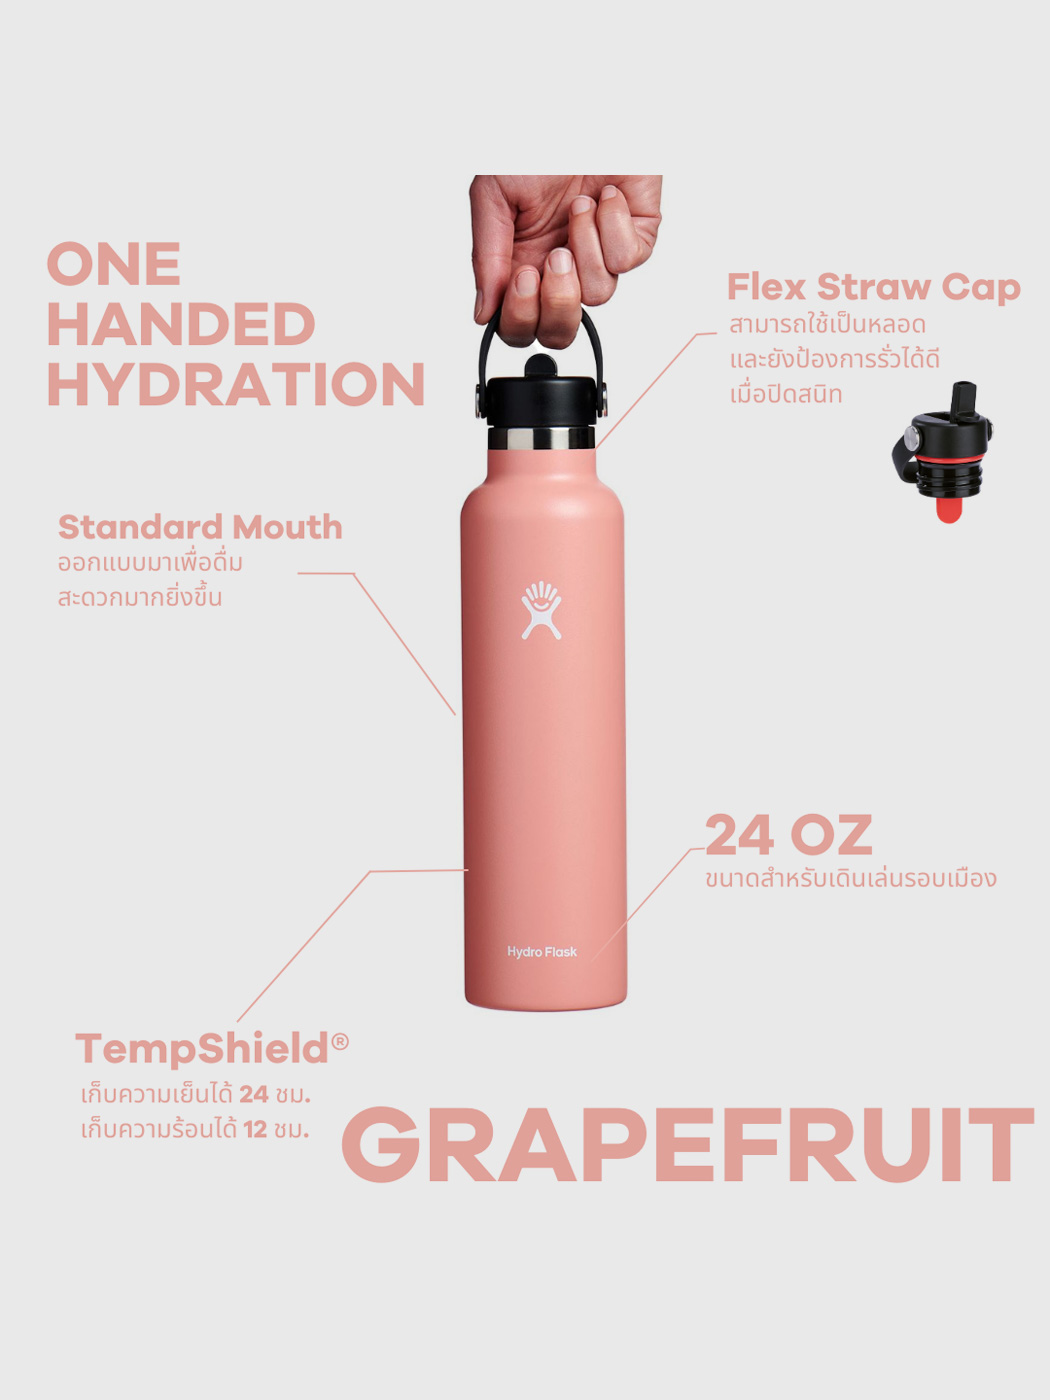 24 oz Standard Mouth with Flex Straw Cap - Grapefruit